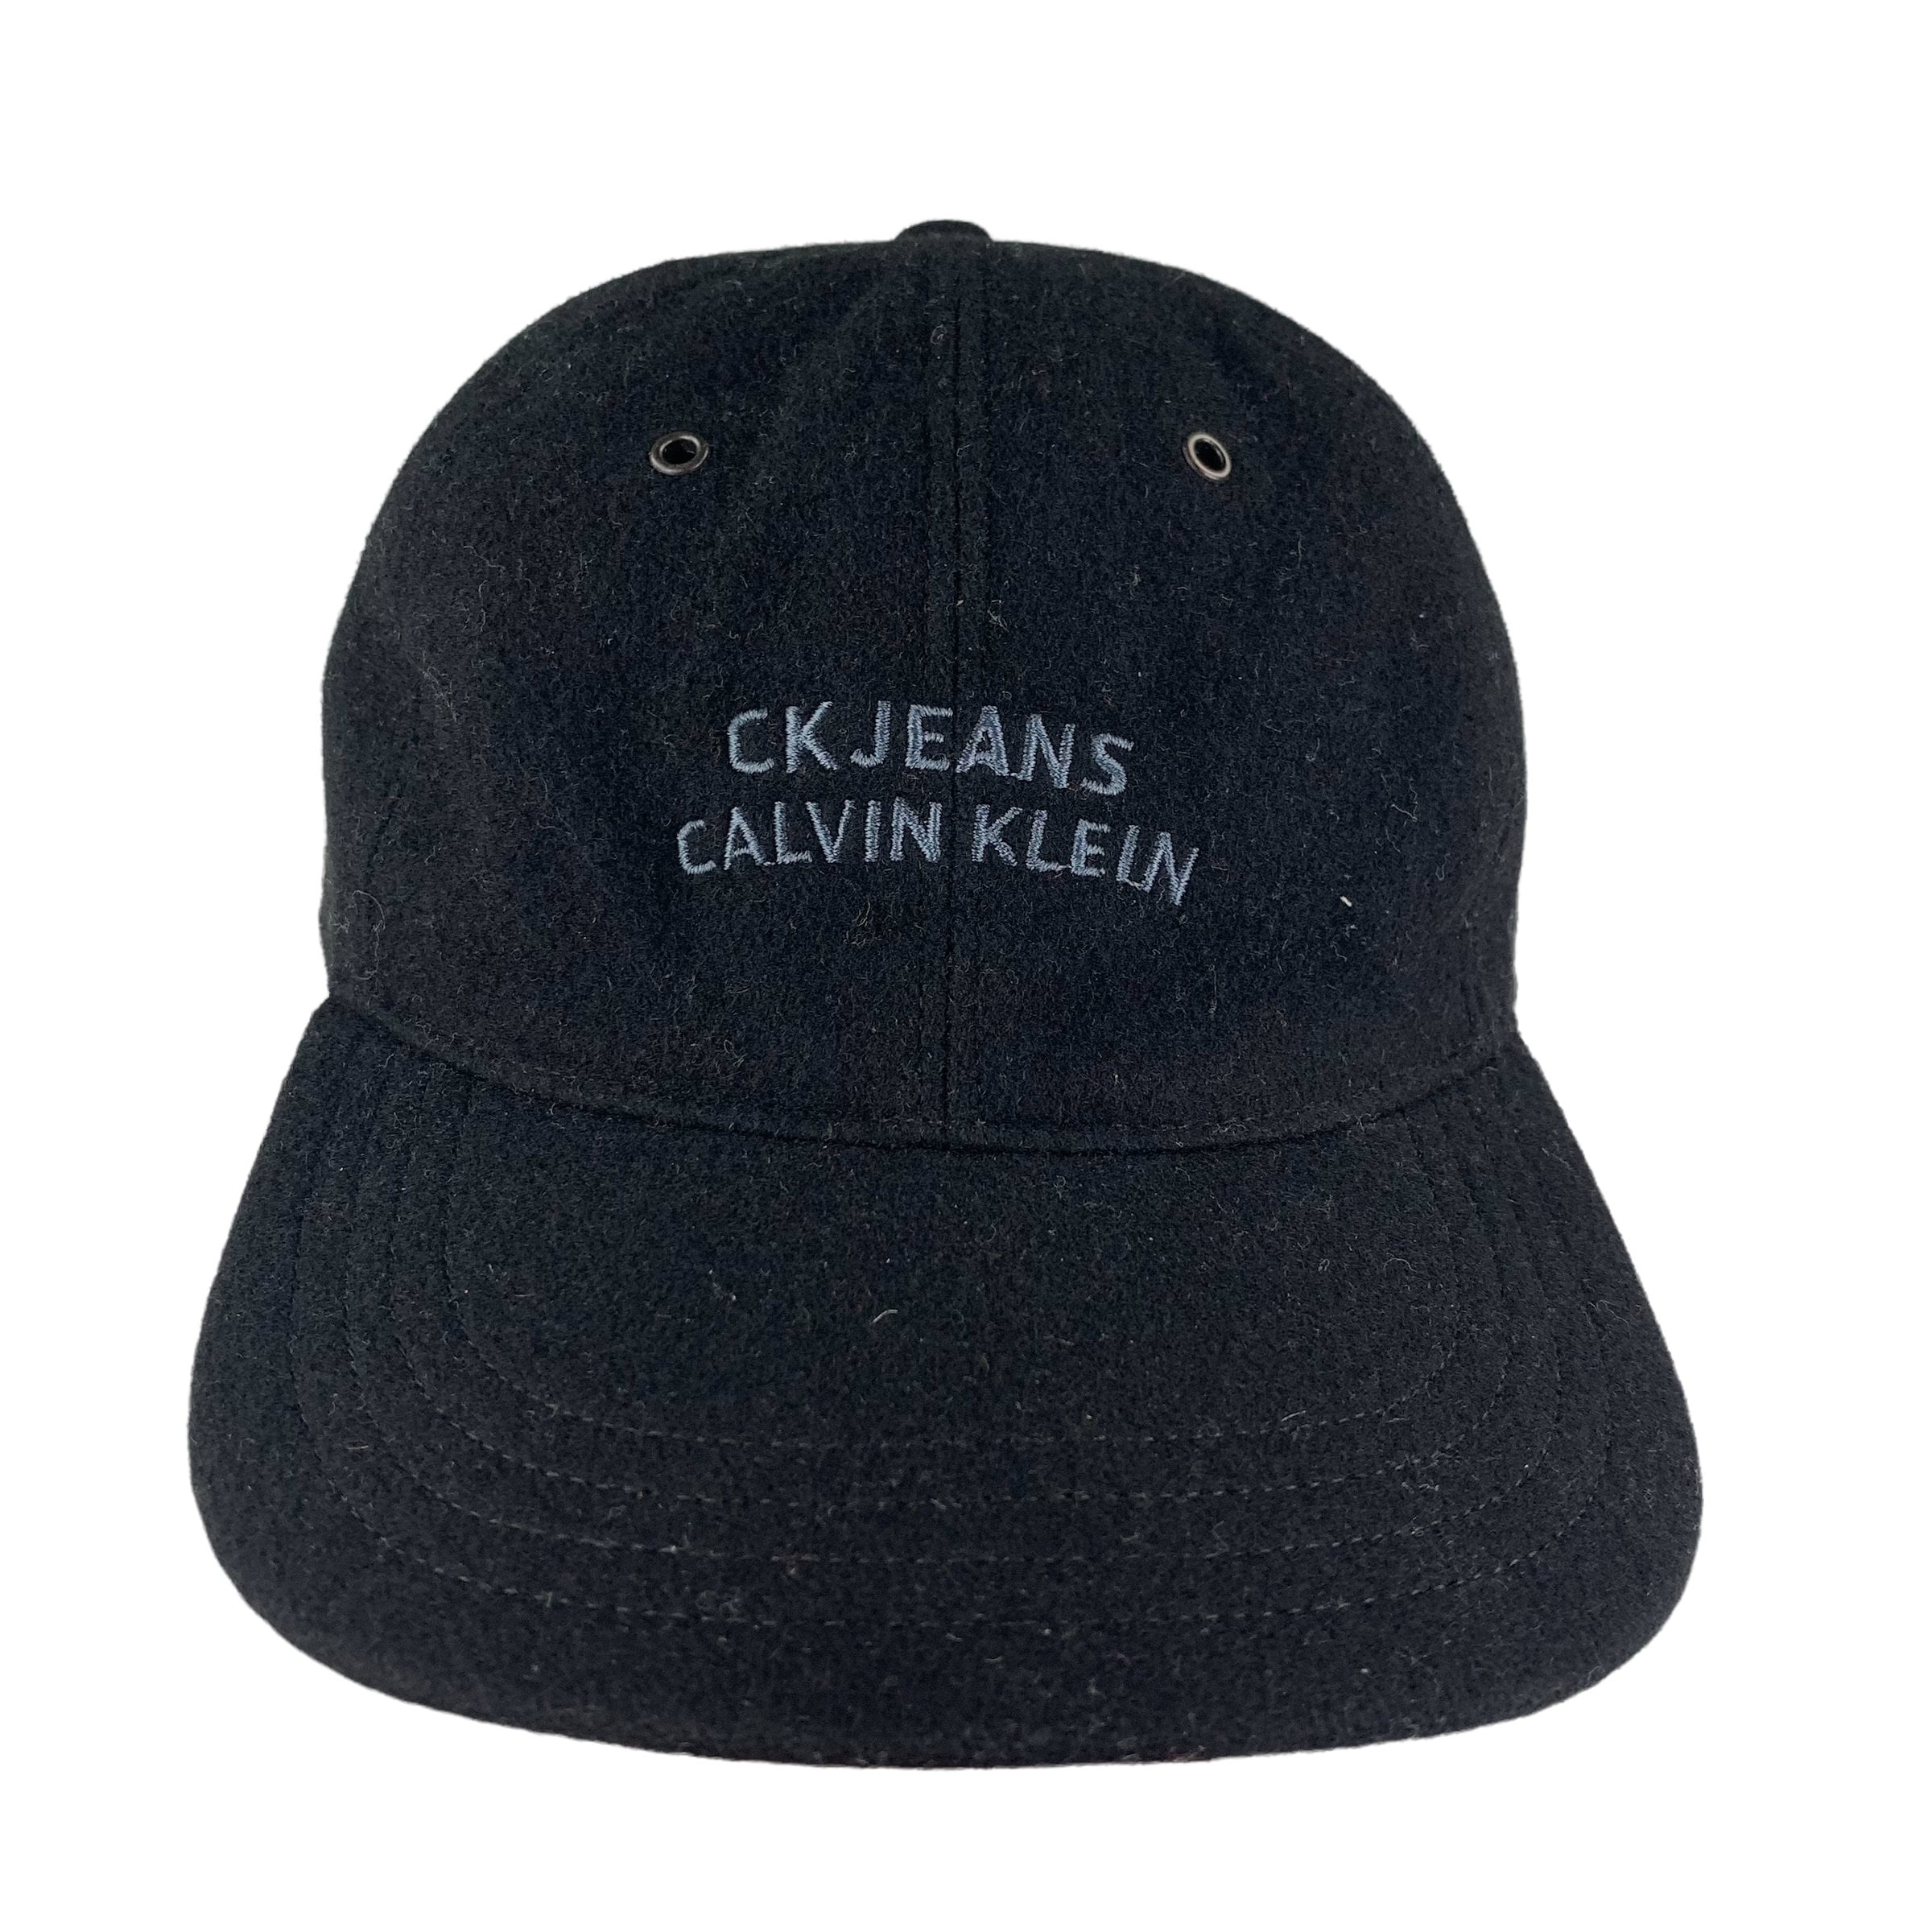 Calvin Klein Cap Etsy 90s -